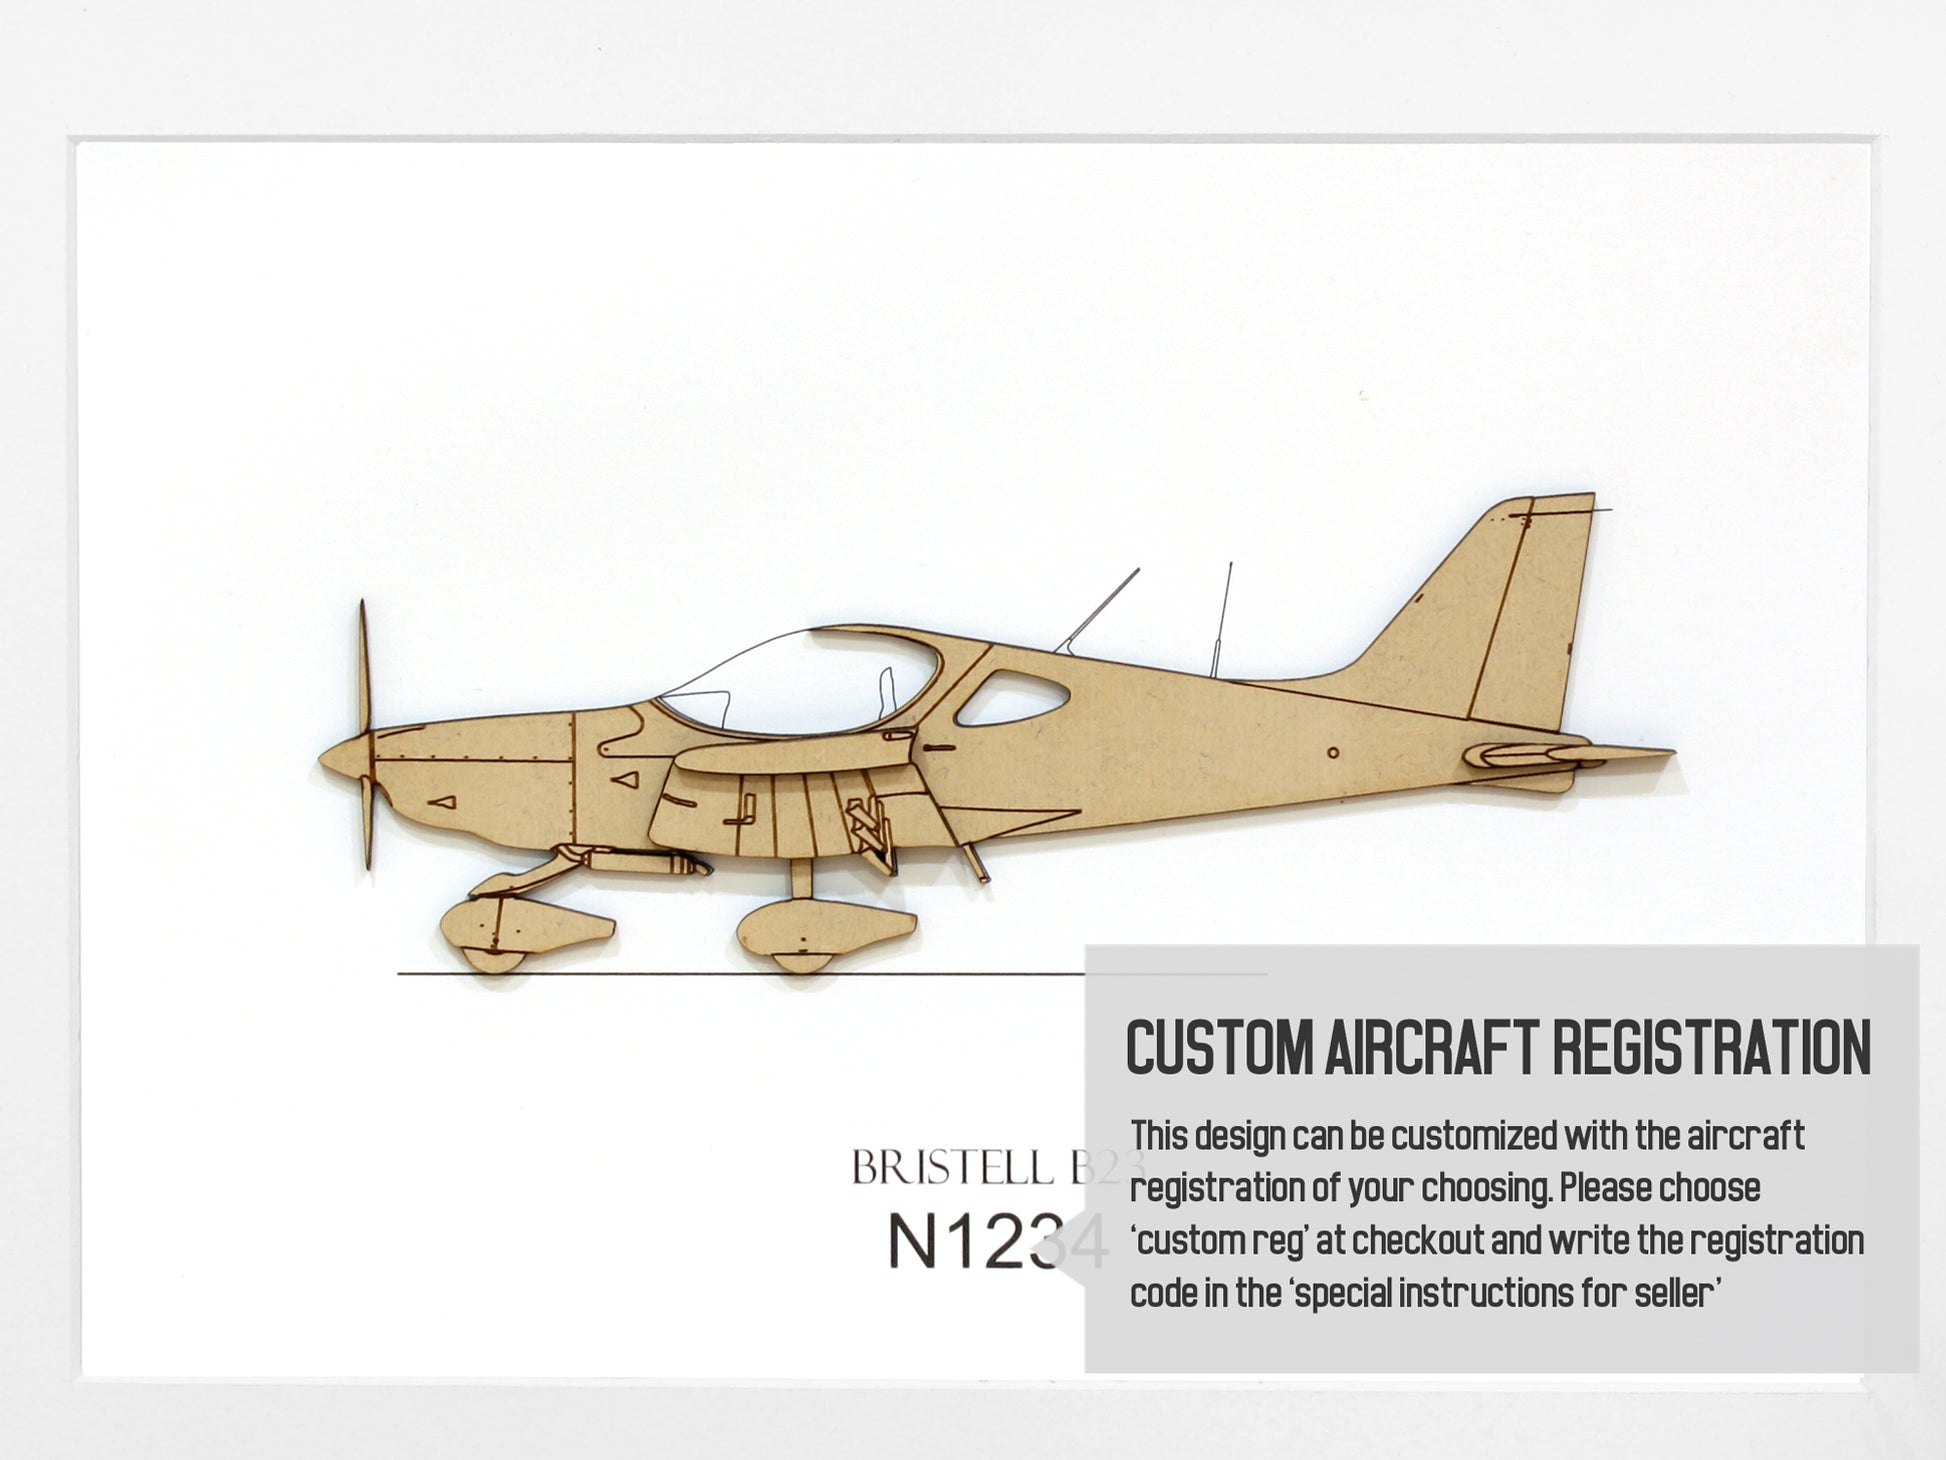 Bristell B23 aviation art